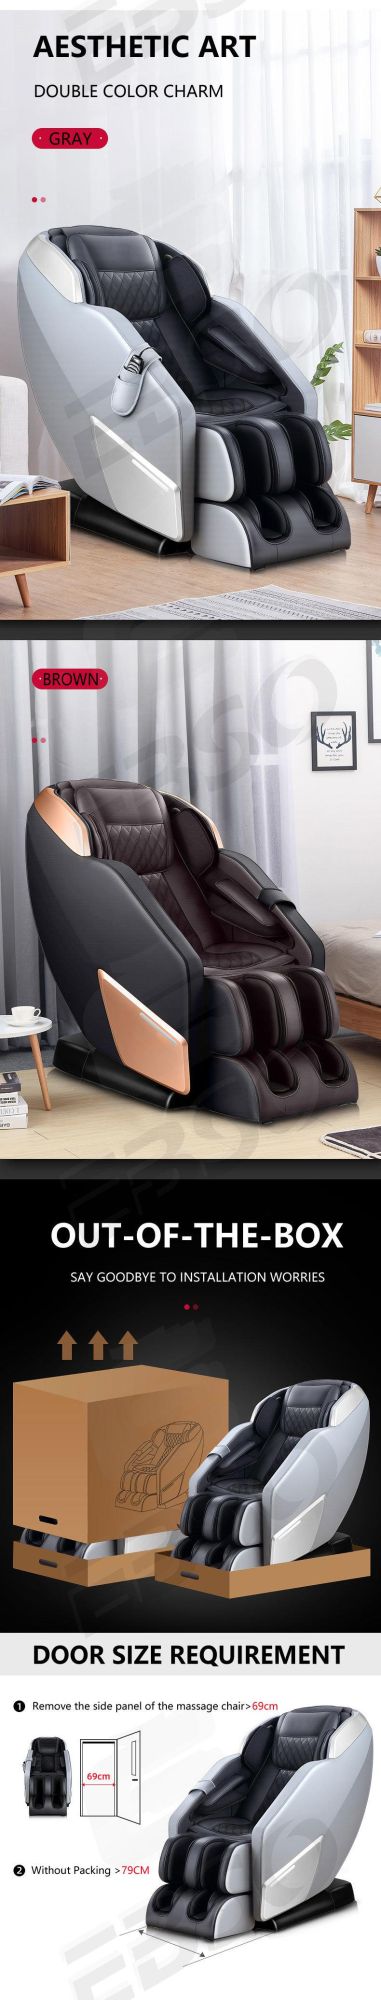 Free Installation of Full Body Massage Chair Sofa for Men Women Home Office